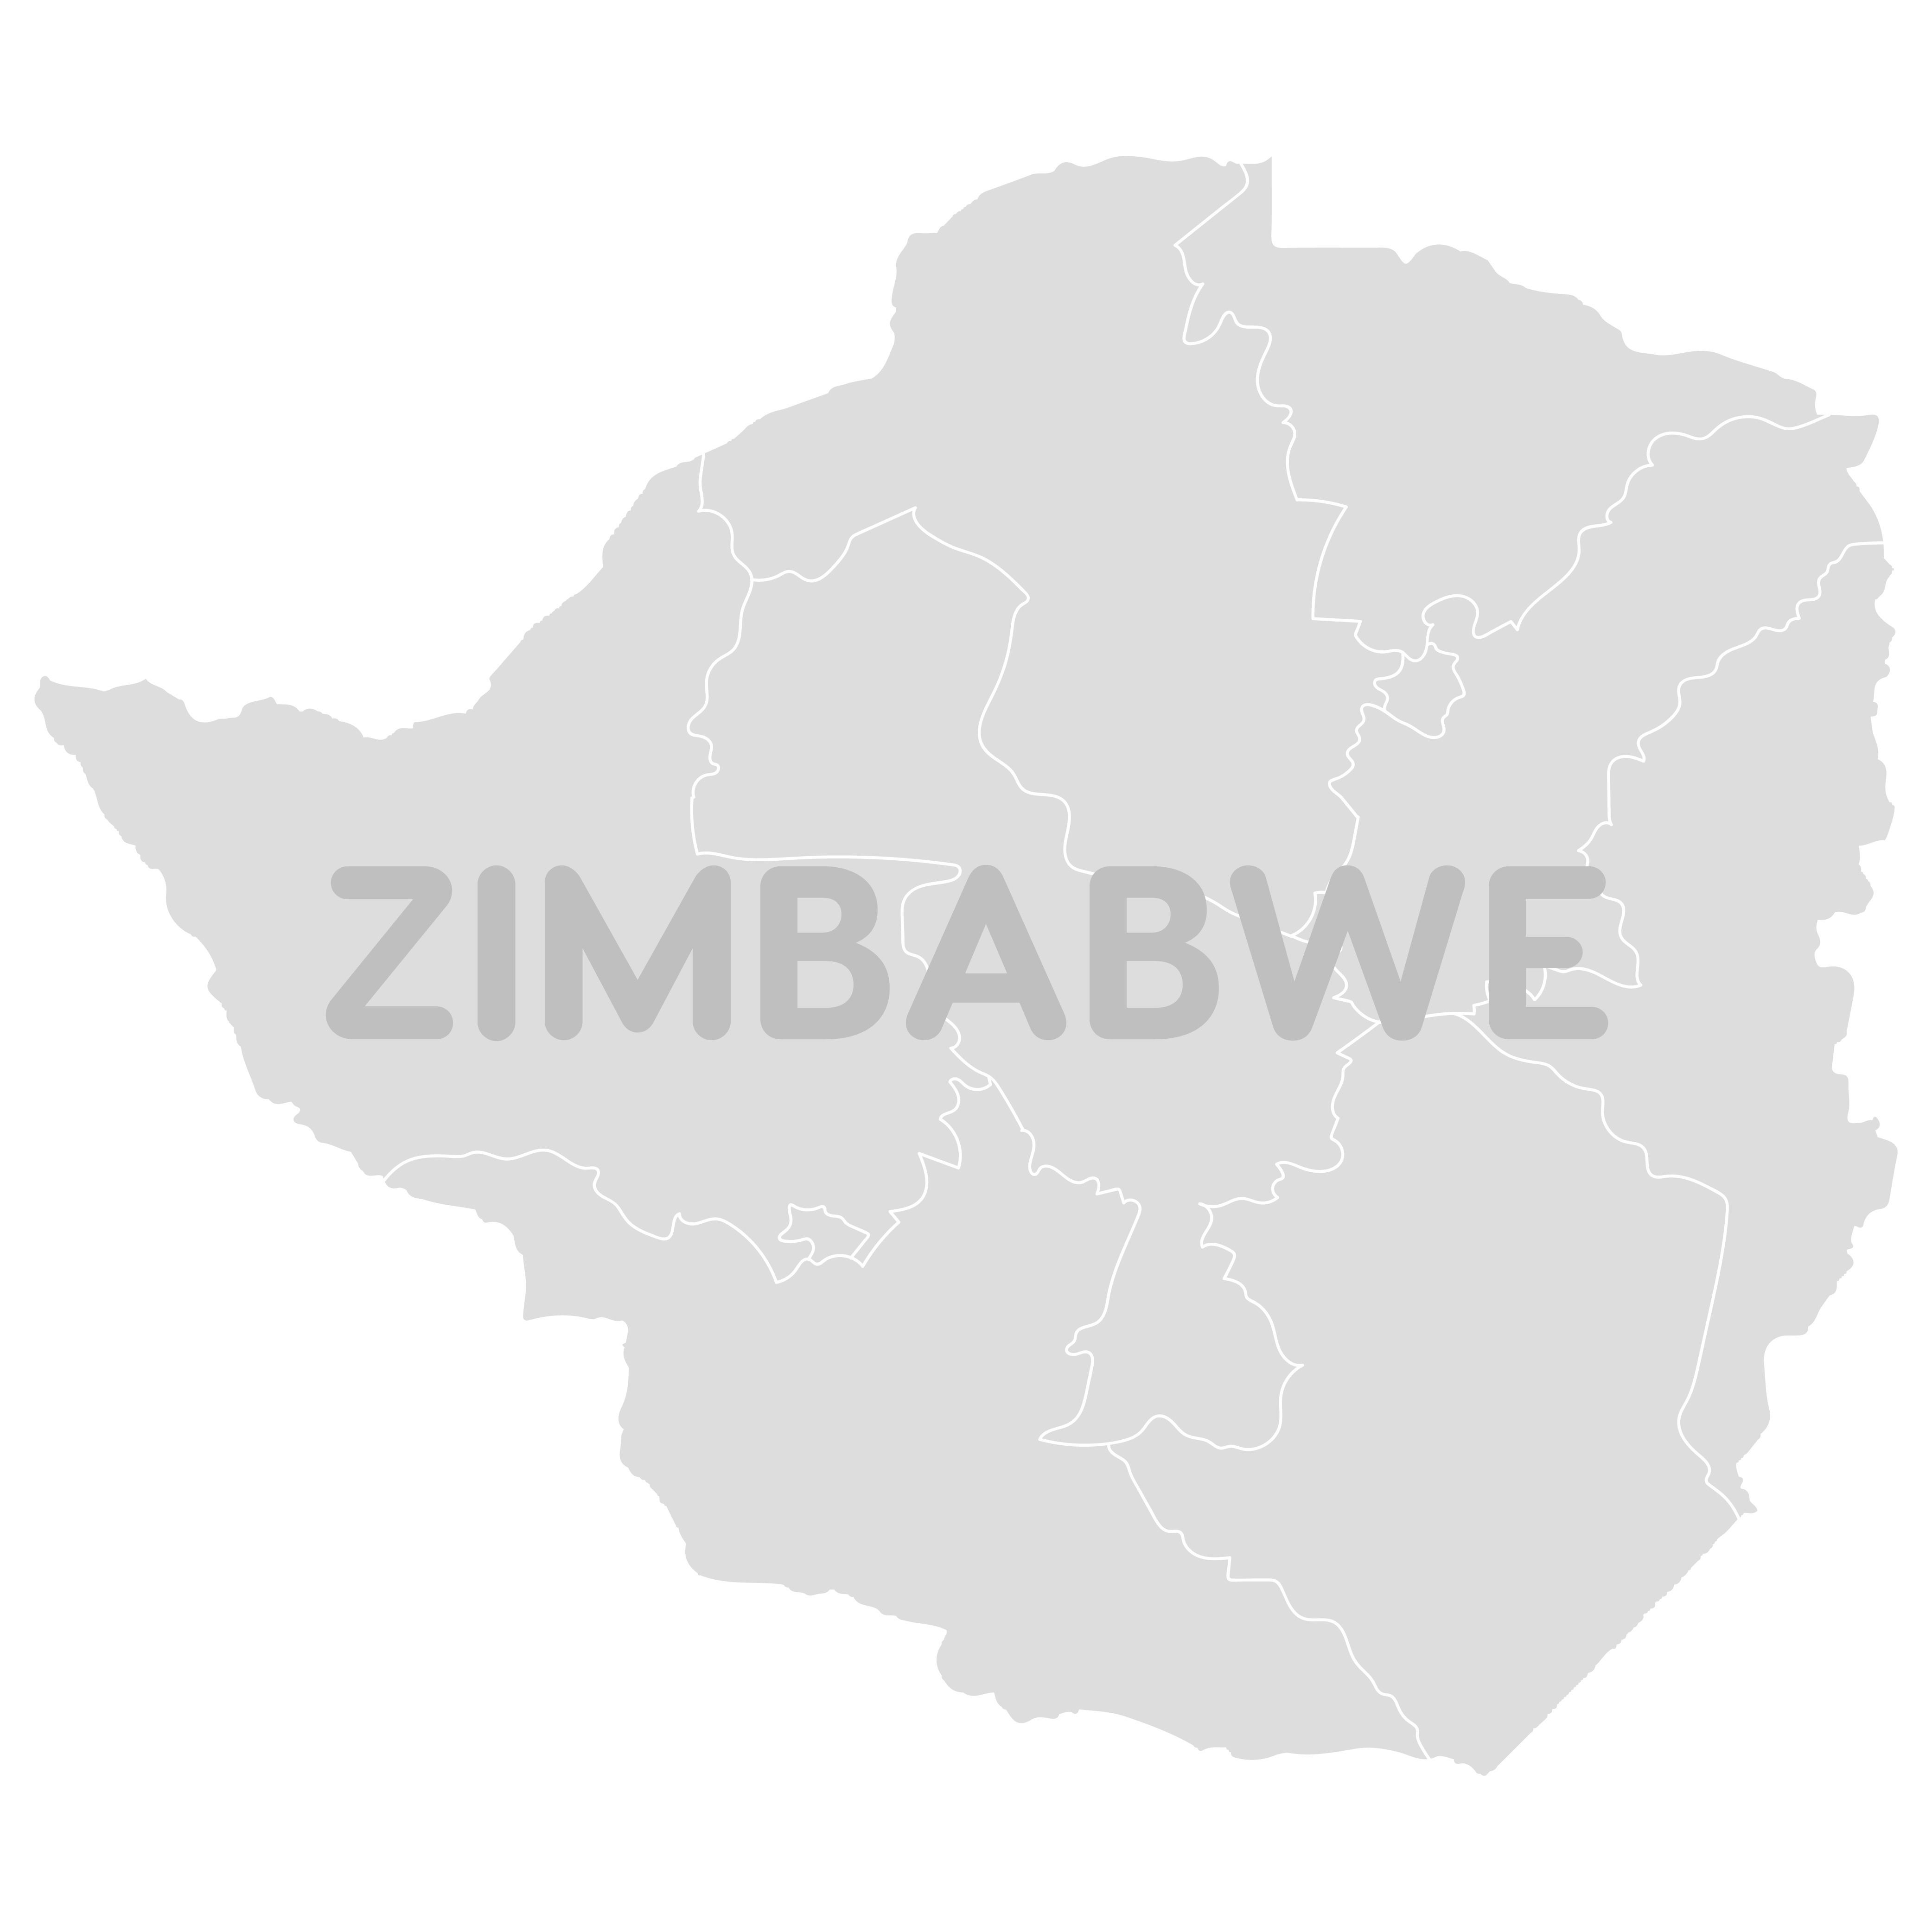 TourSA Zimbabwe Map Tour SA